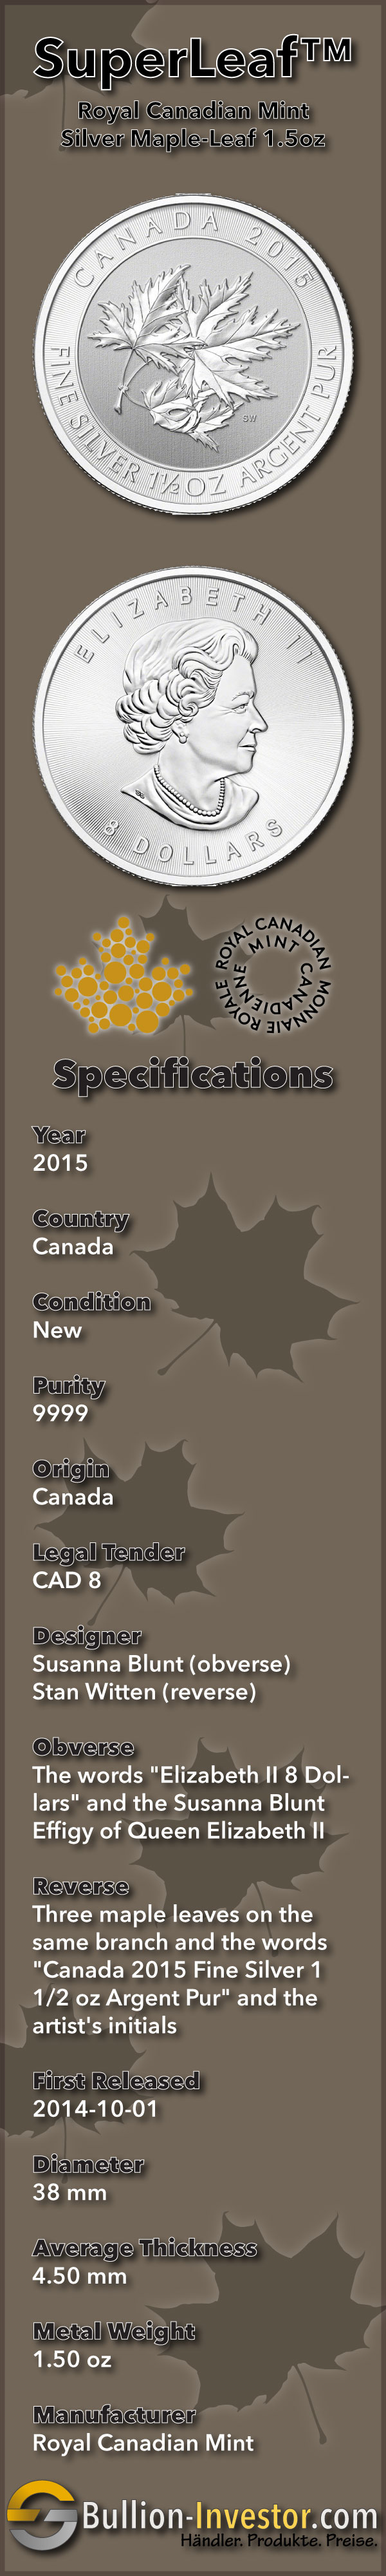 Canadian SuperLeaf™ — Super Maple Leaf 1.5oz 2015 — Silbermünze Kanada — Royal Canadian Mint (Infografik)